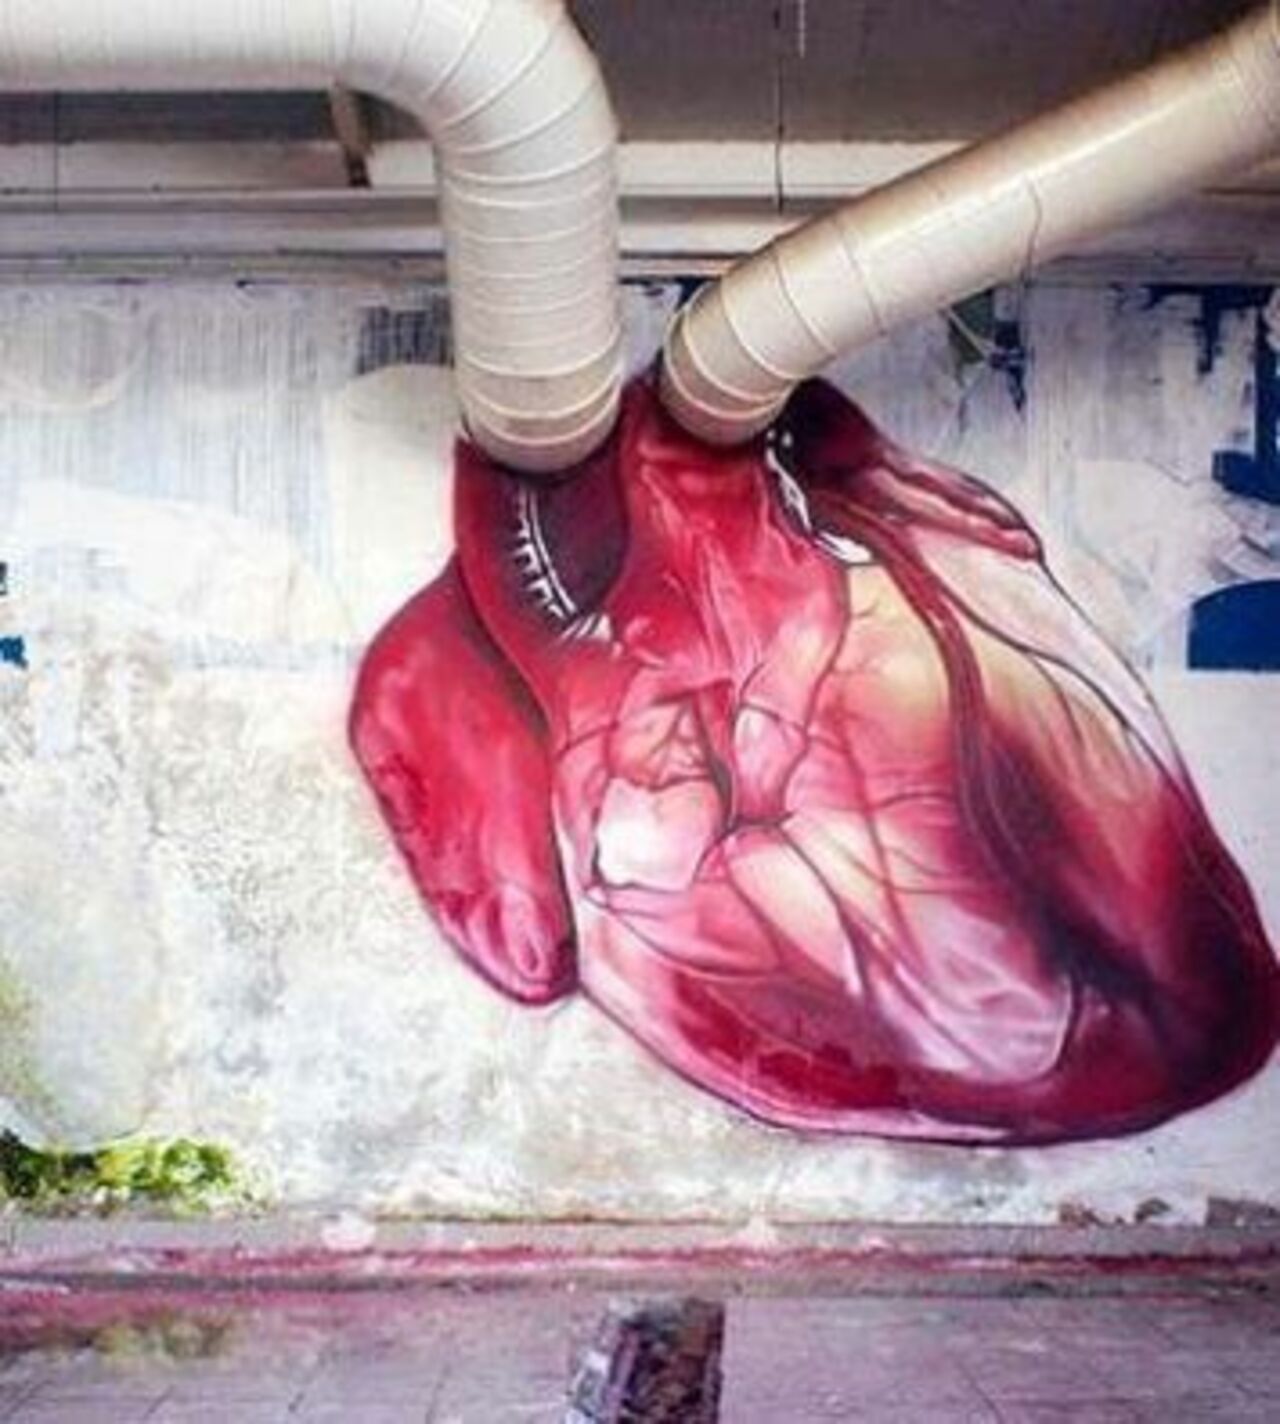 #Heart – Creative #Streetart | Be ▲rtist - Be ▲rt https://beartistbeart.com/2016/08/22/heart-creative-streetart/?utm_campaign=crowdfire&utm_content=crowdfire&utm_medium=social&utm_source=twitter https://t.co/Mt7a1OUffK